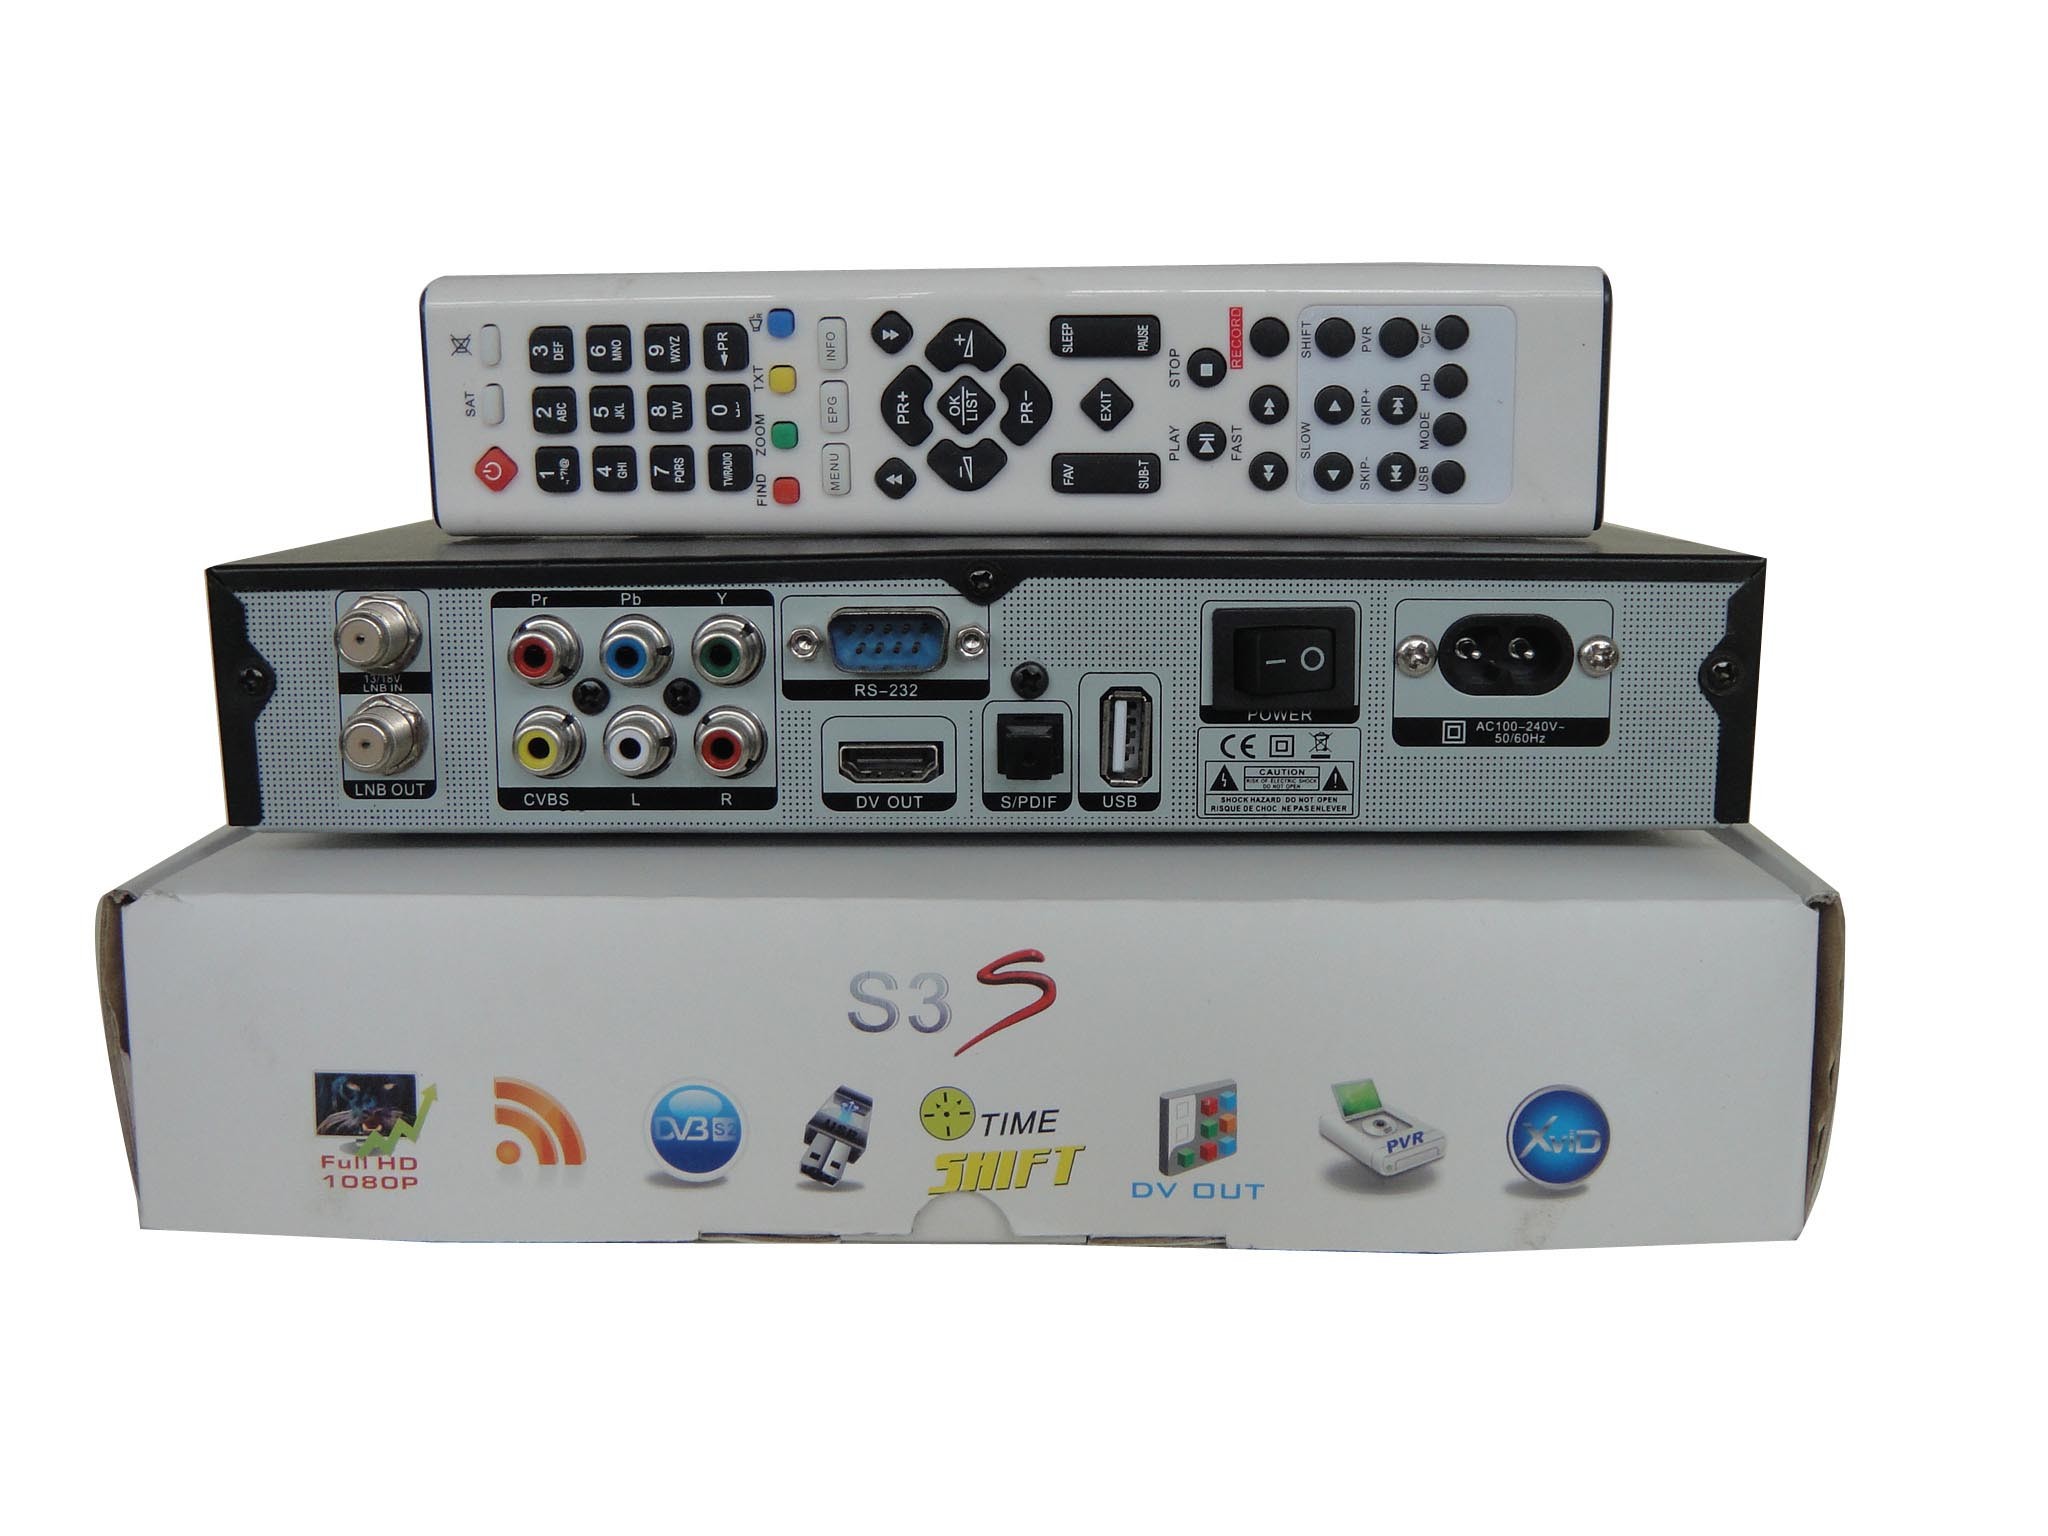 ICLASS 9696X PVR satellite box